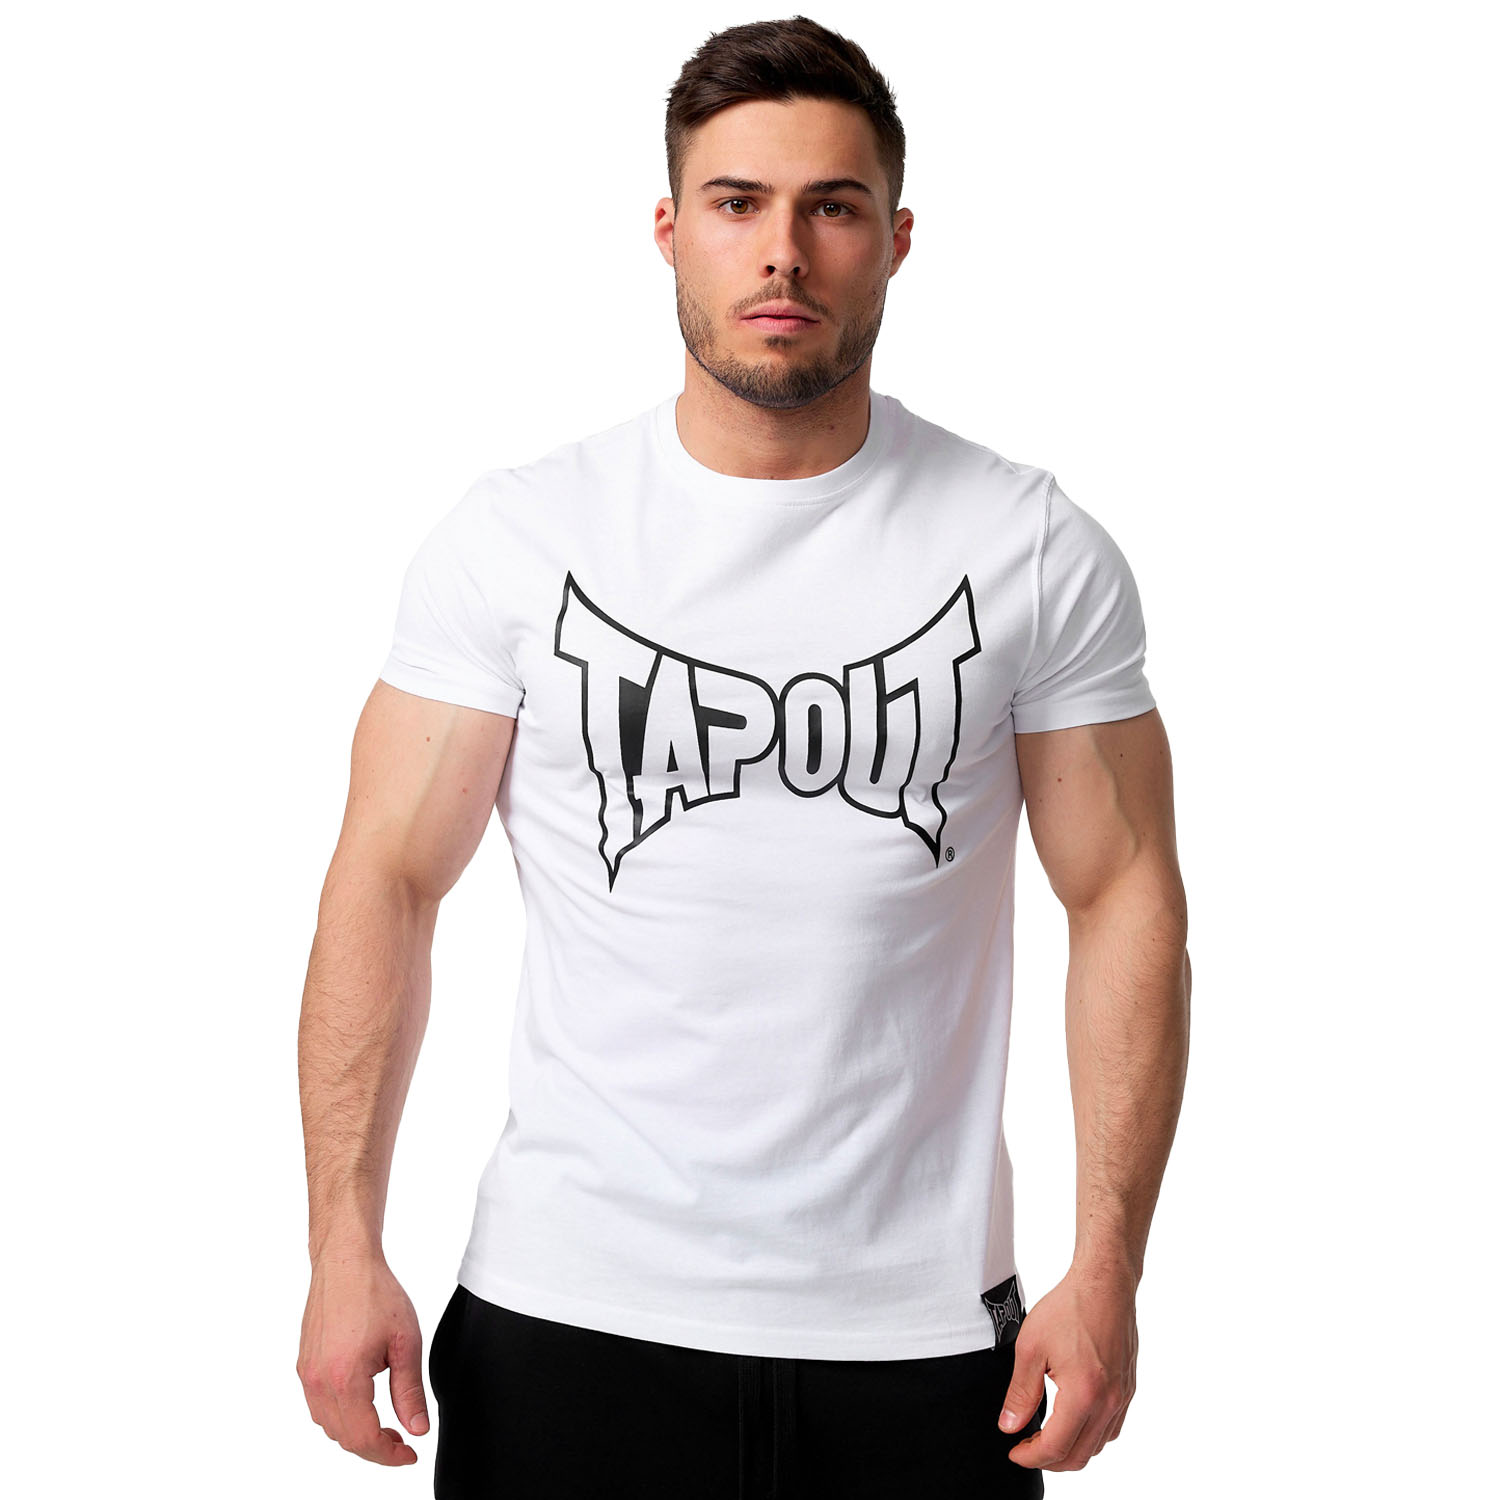 Tapout T-Shirt, Lifestyle Basic, white-black